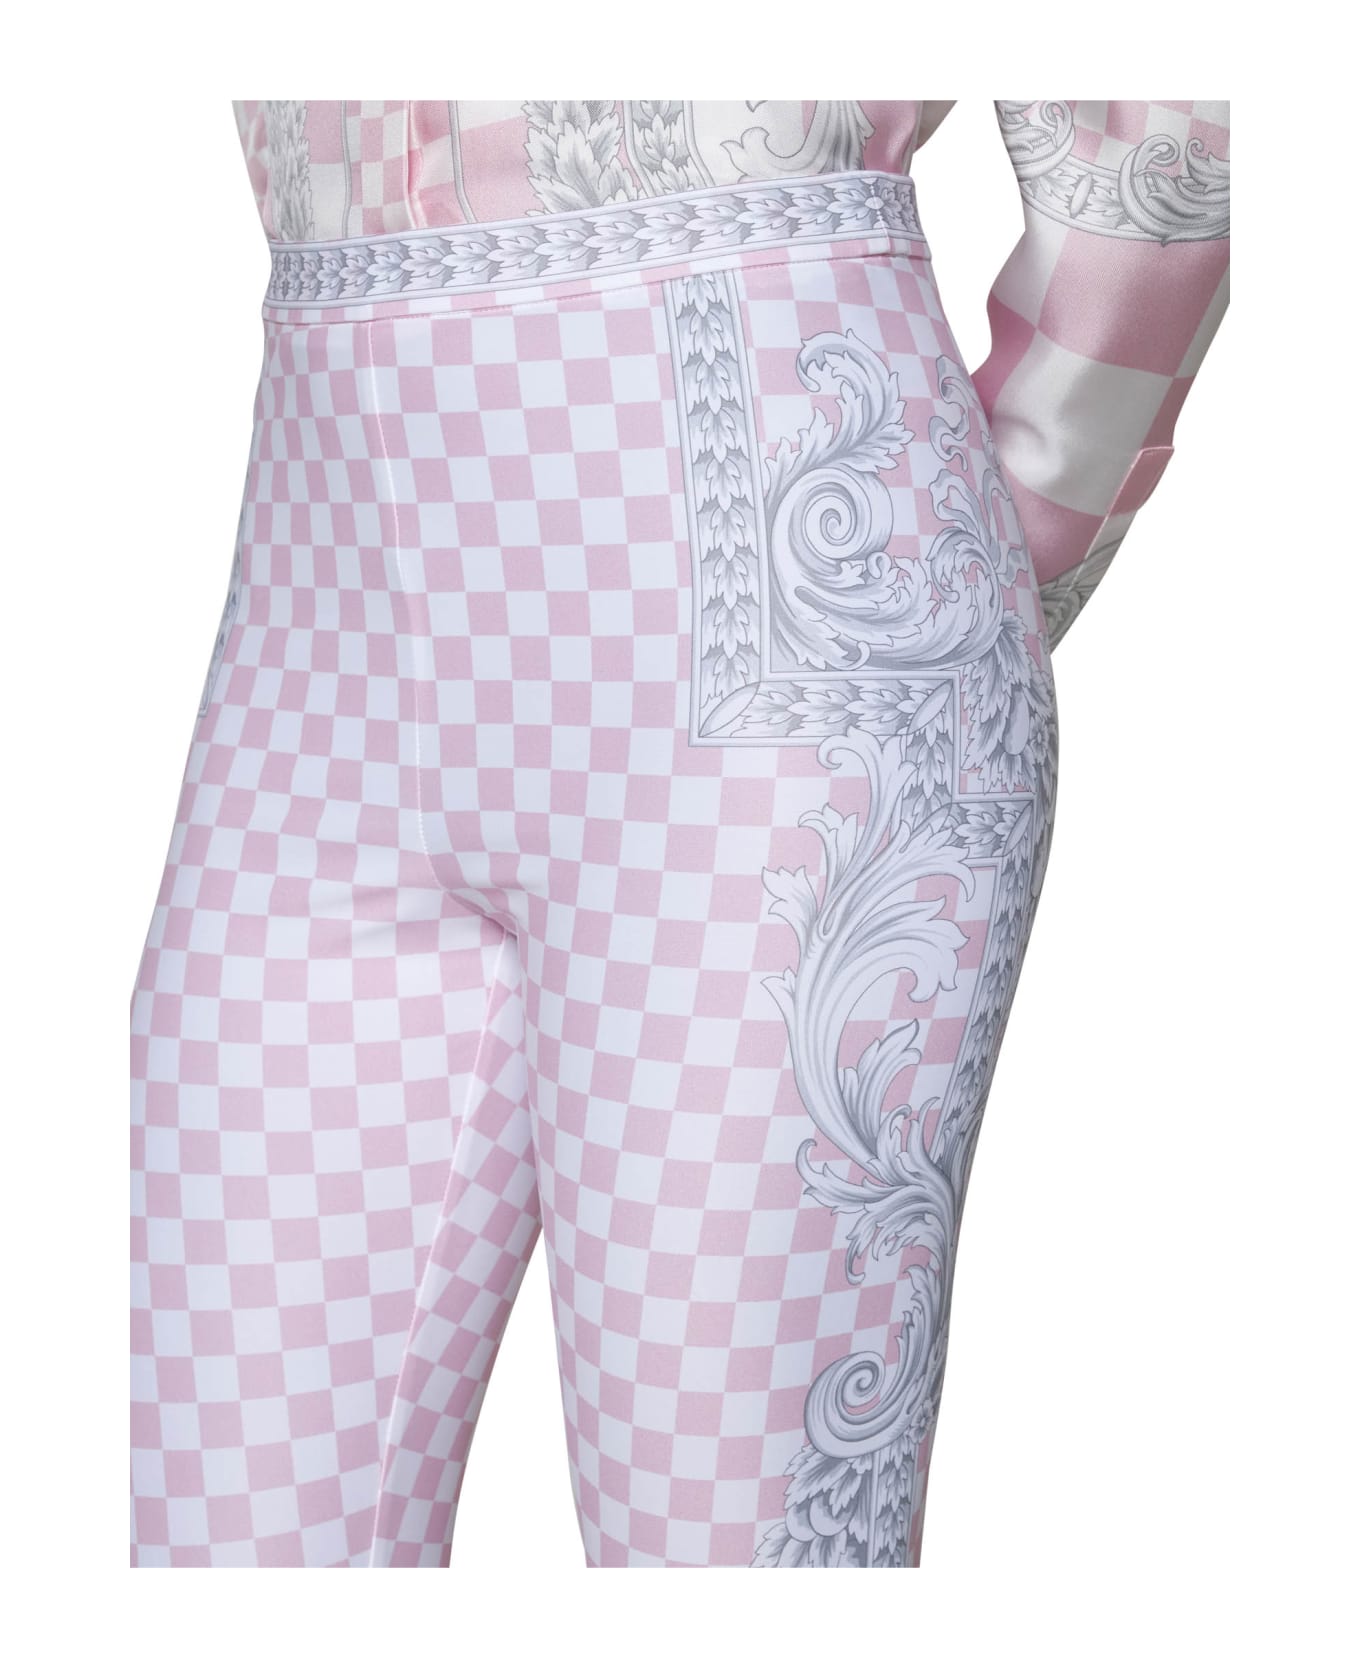 Versace Pants - Pastel pink + white + silver レギンス